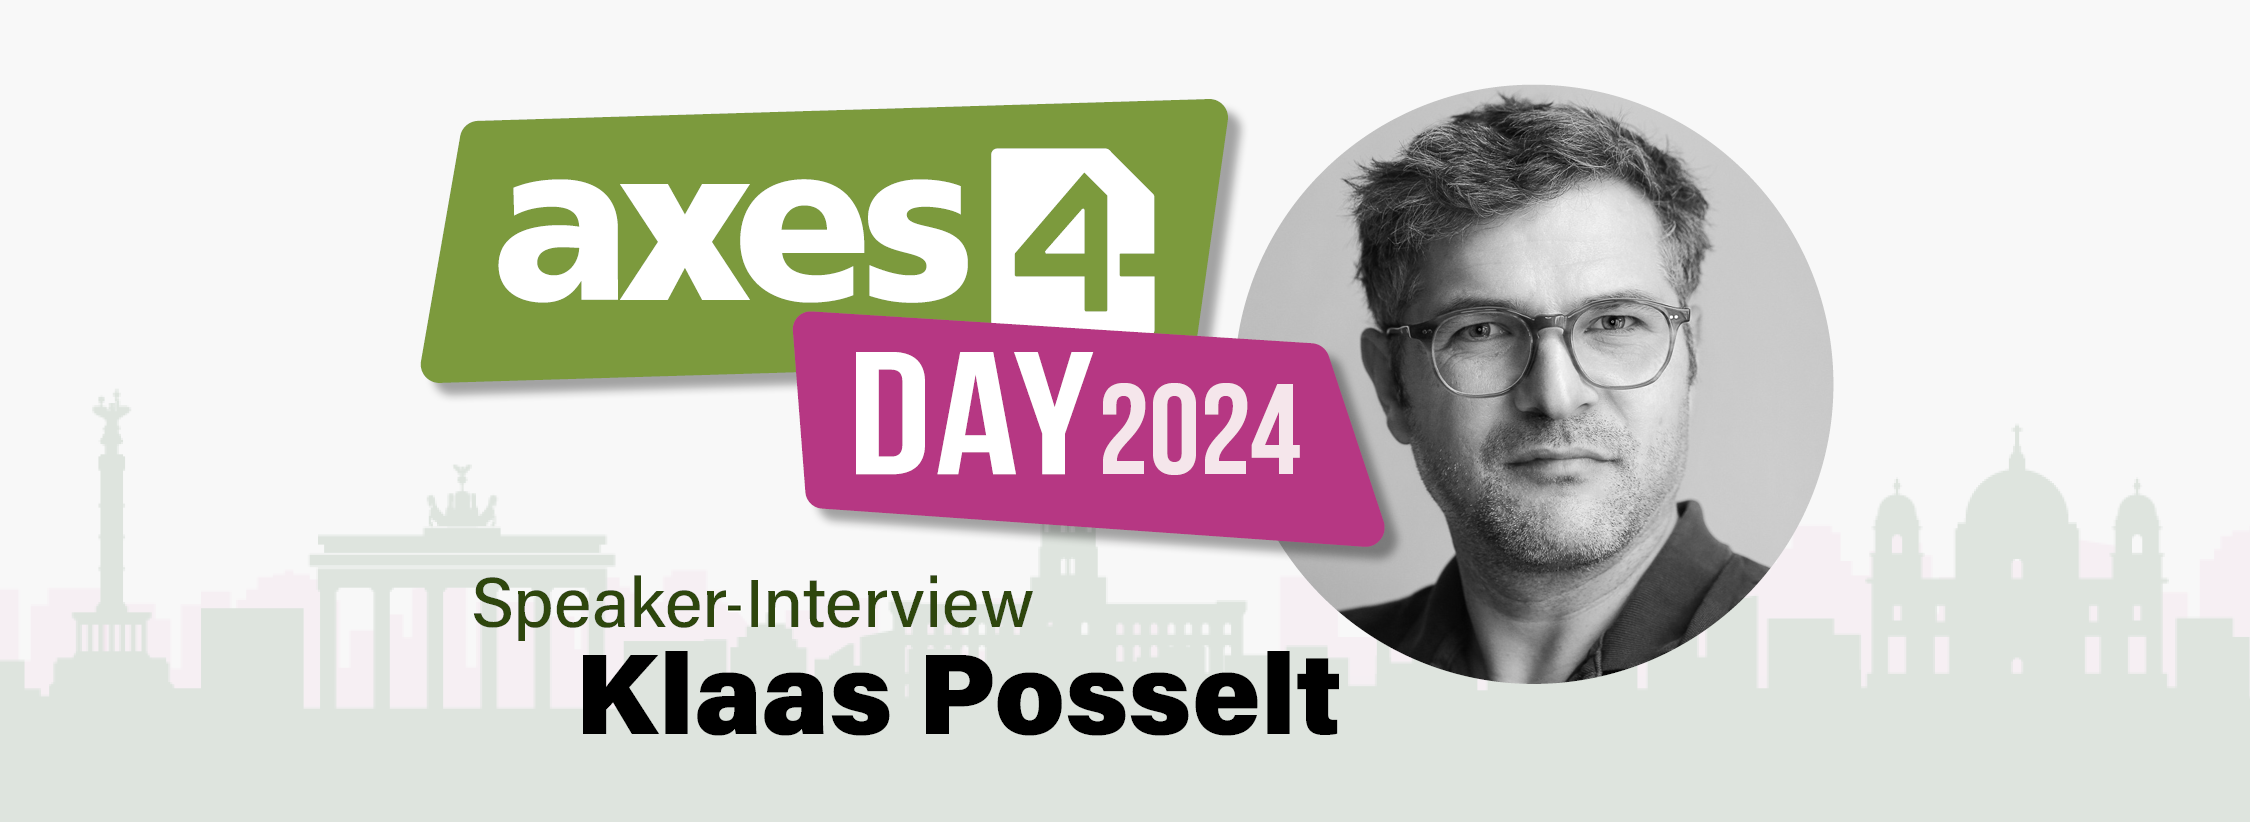 Logo: axes4 Day 2024. Portrait von Klaas Posselt. Text: Speaker-Interview: Klaas Posselt